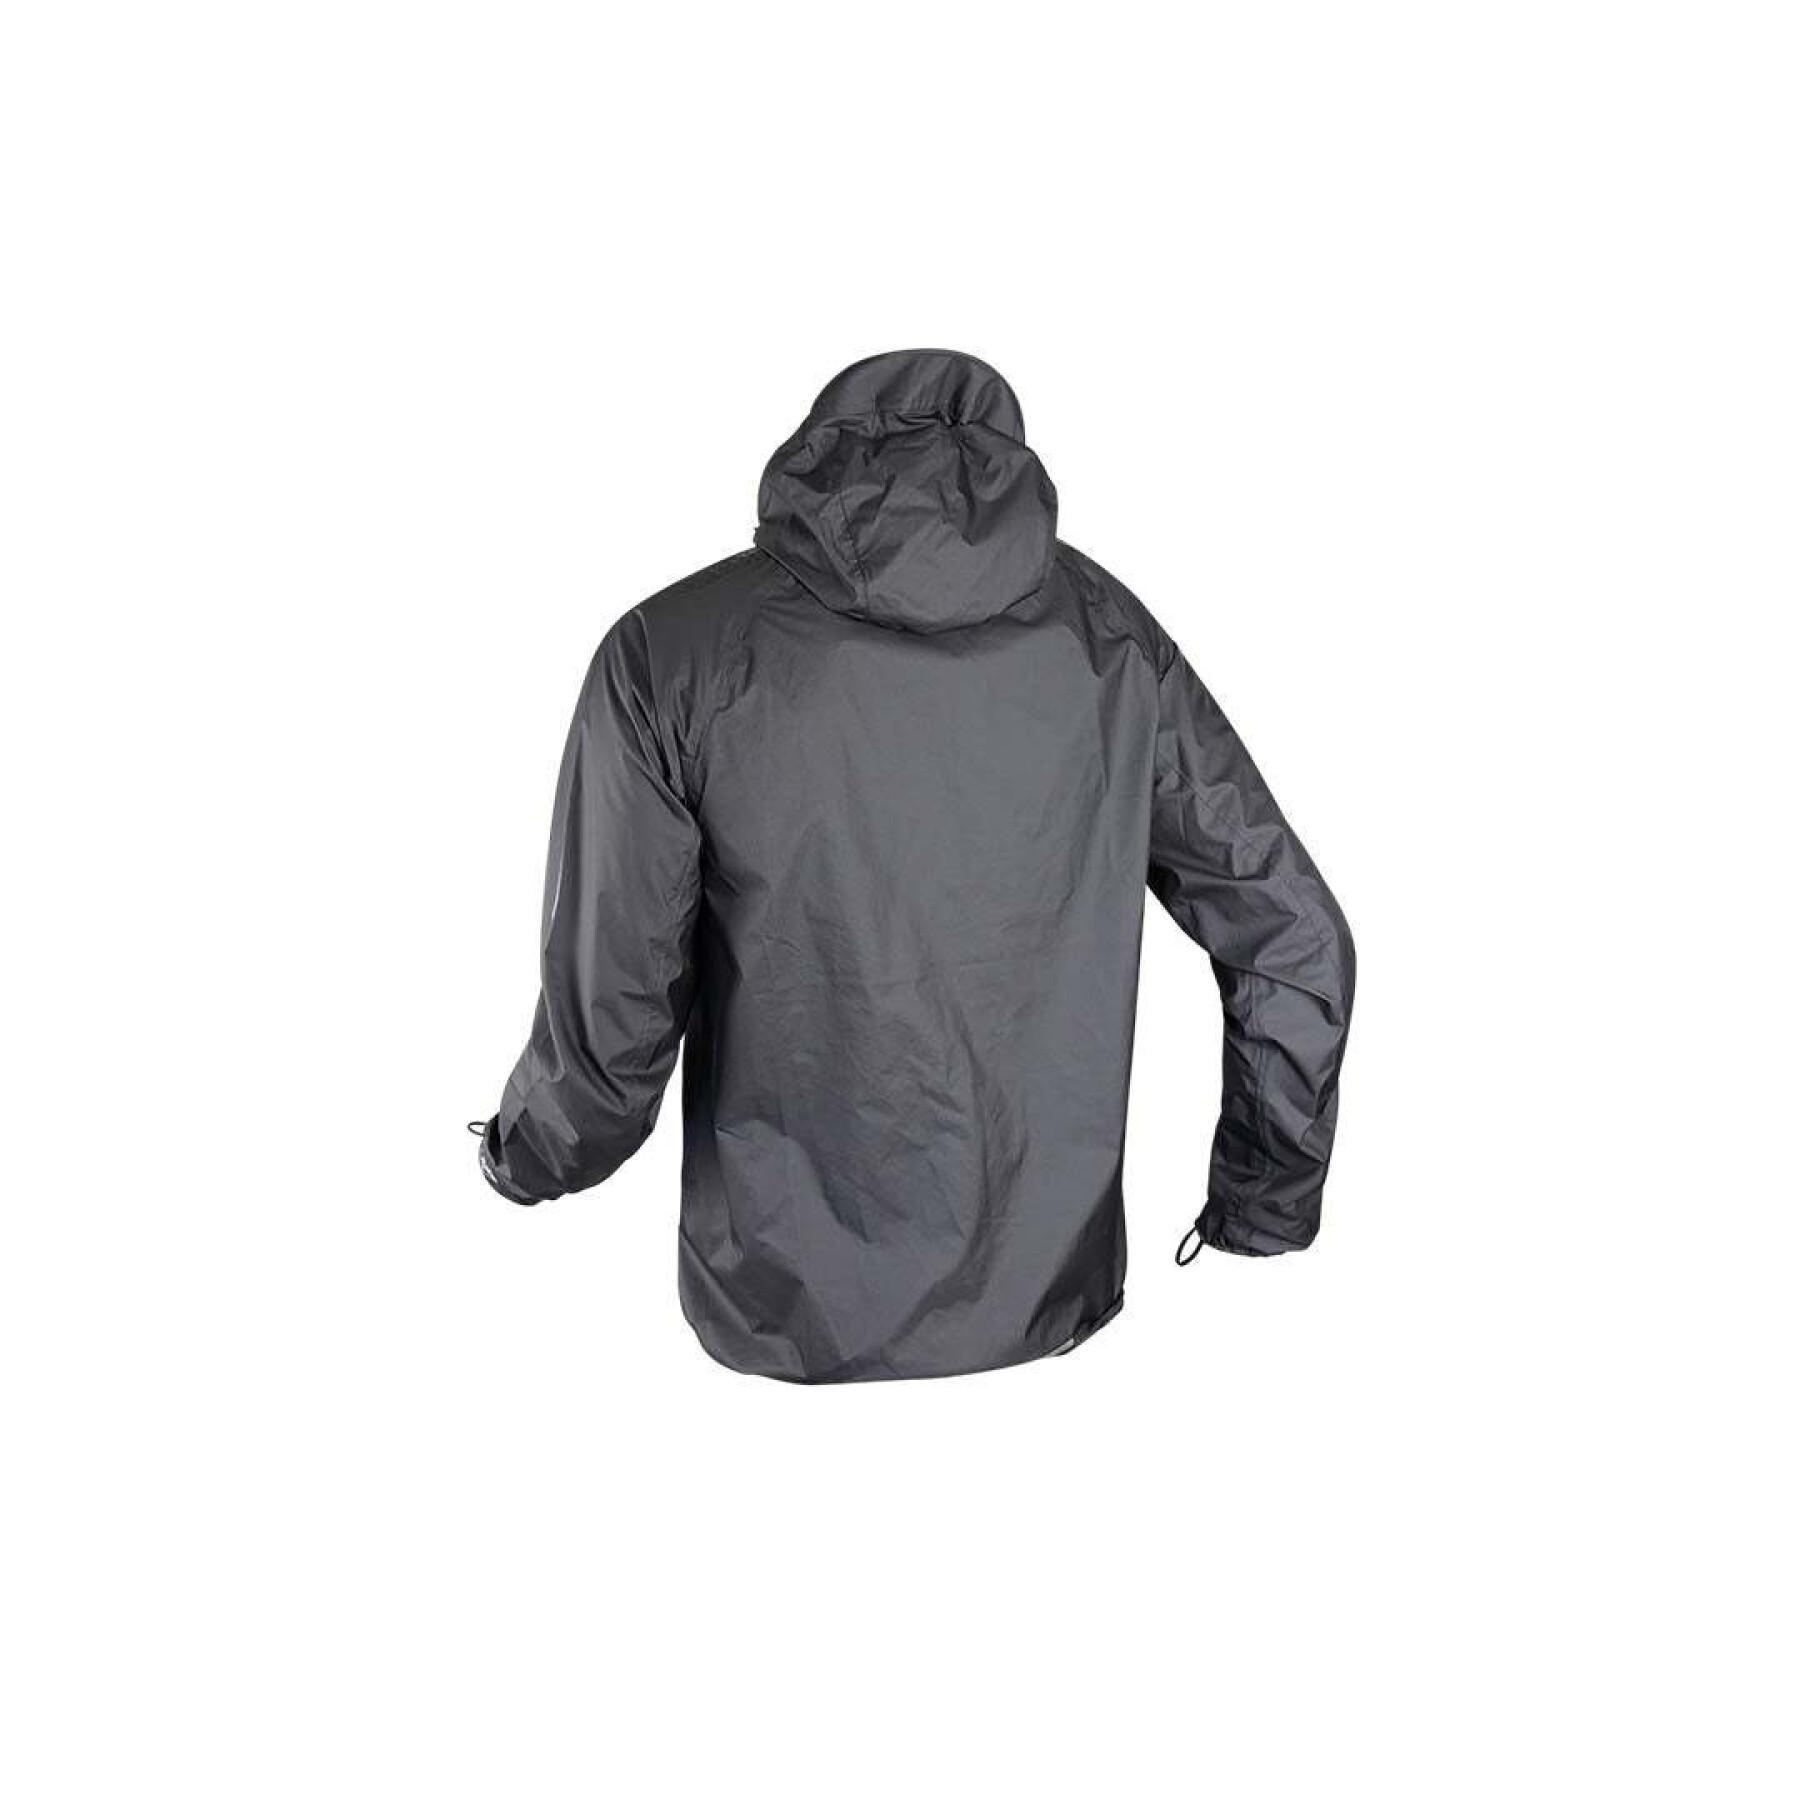 Waterproof jacket RaidLight Ultralight 2.0 Mp+